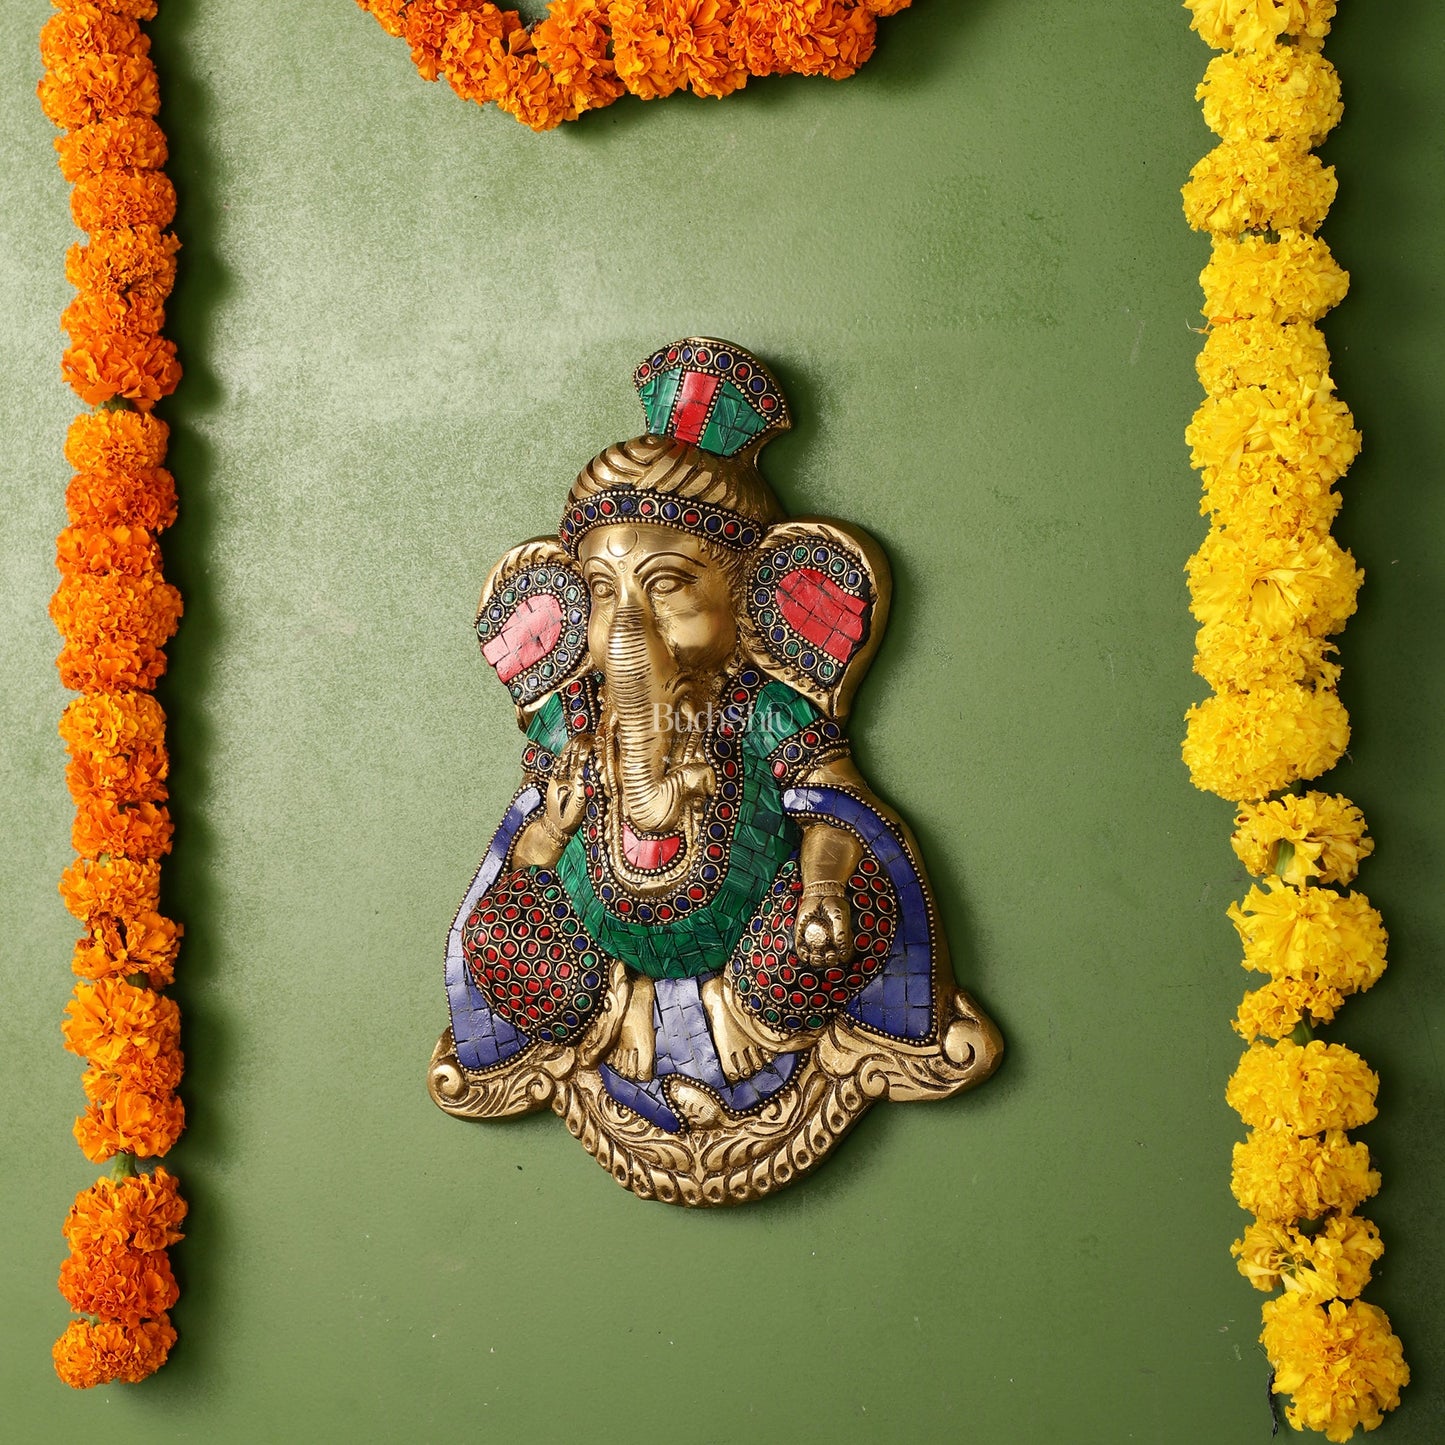 Brass Superfine Lord Ganesha Wall Hanging - 10x7.5x2 Inch - Budhshiv.com